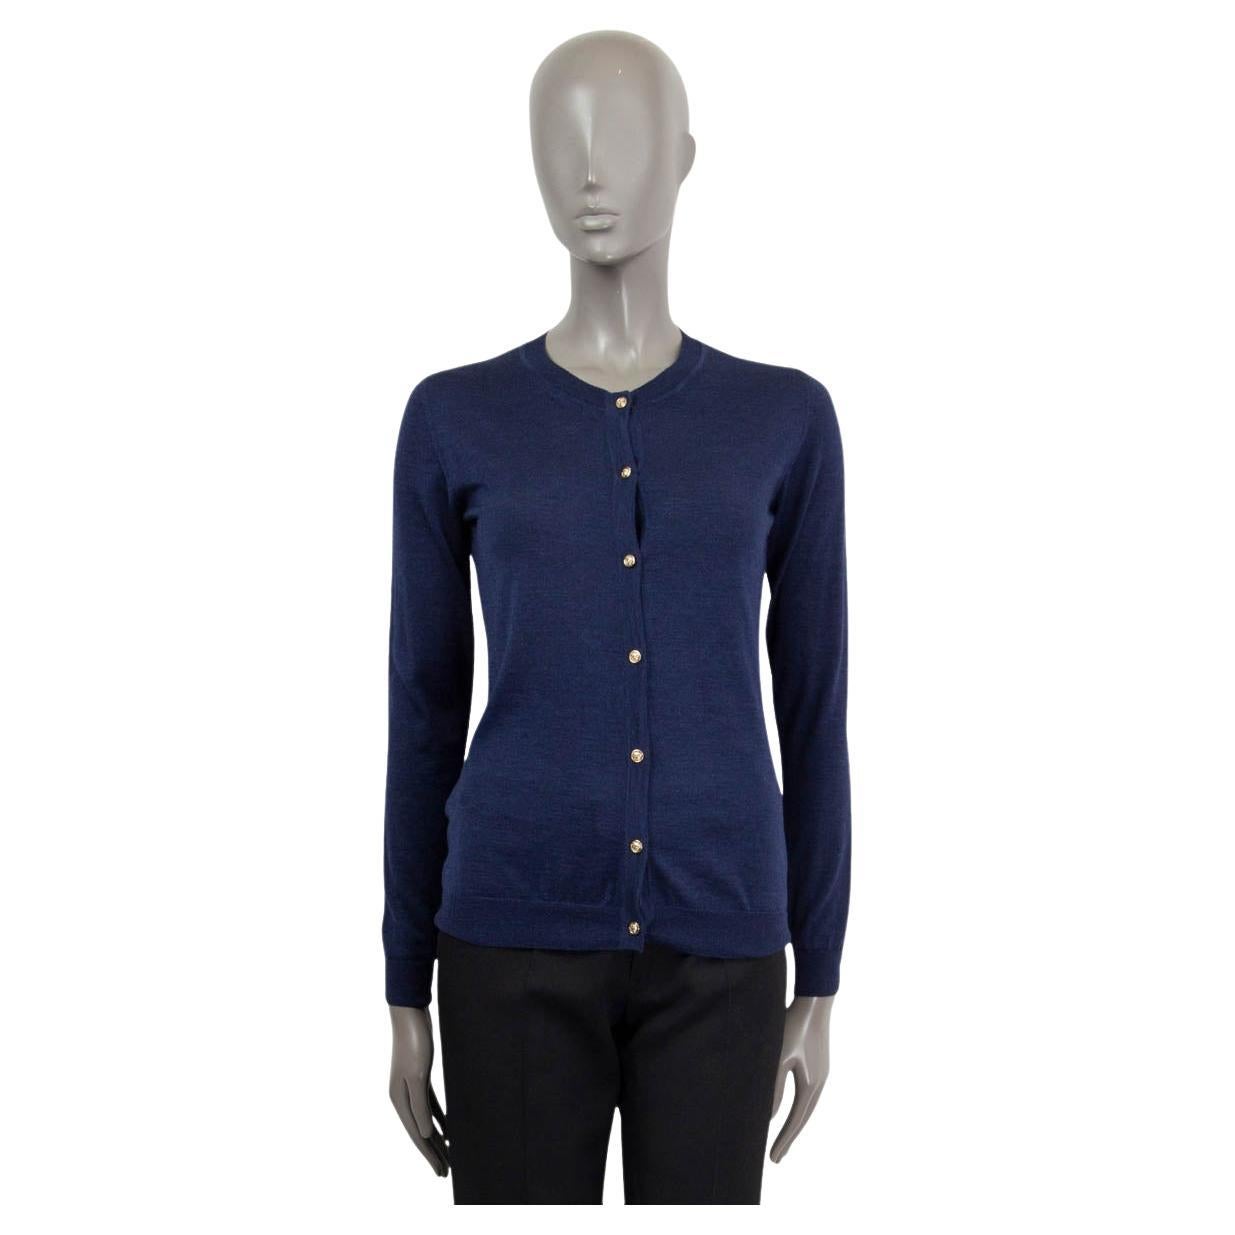 VERSACE navy blue cashmere & silk BUTTON FRONT CREWNECK Cardigan Sweater 40 S For Sale